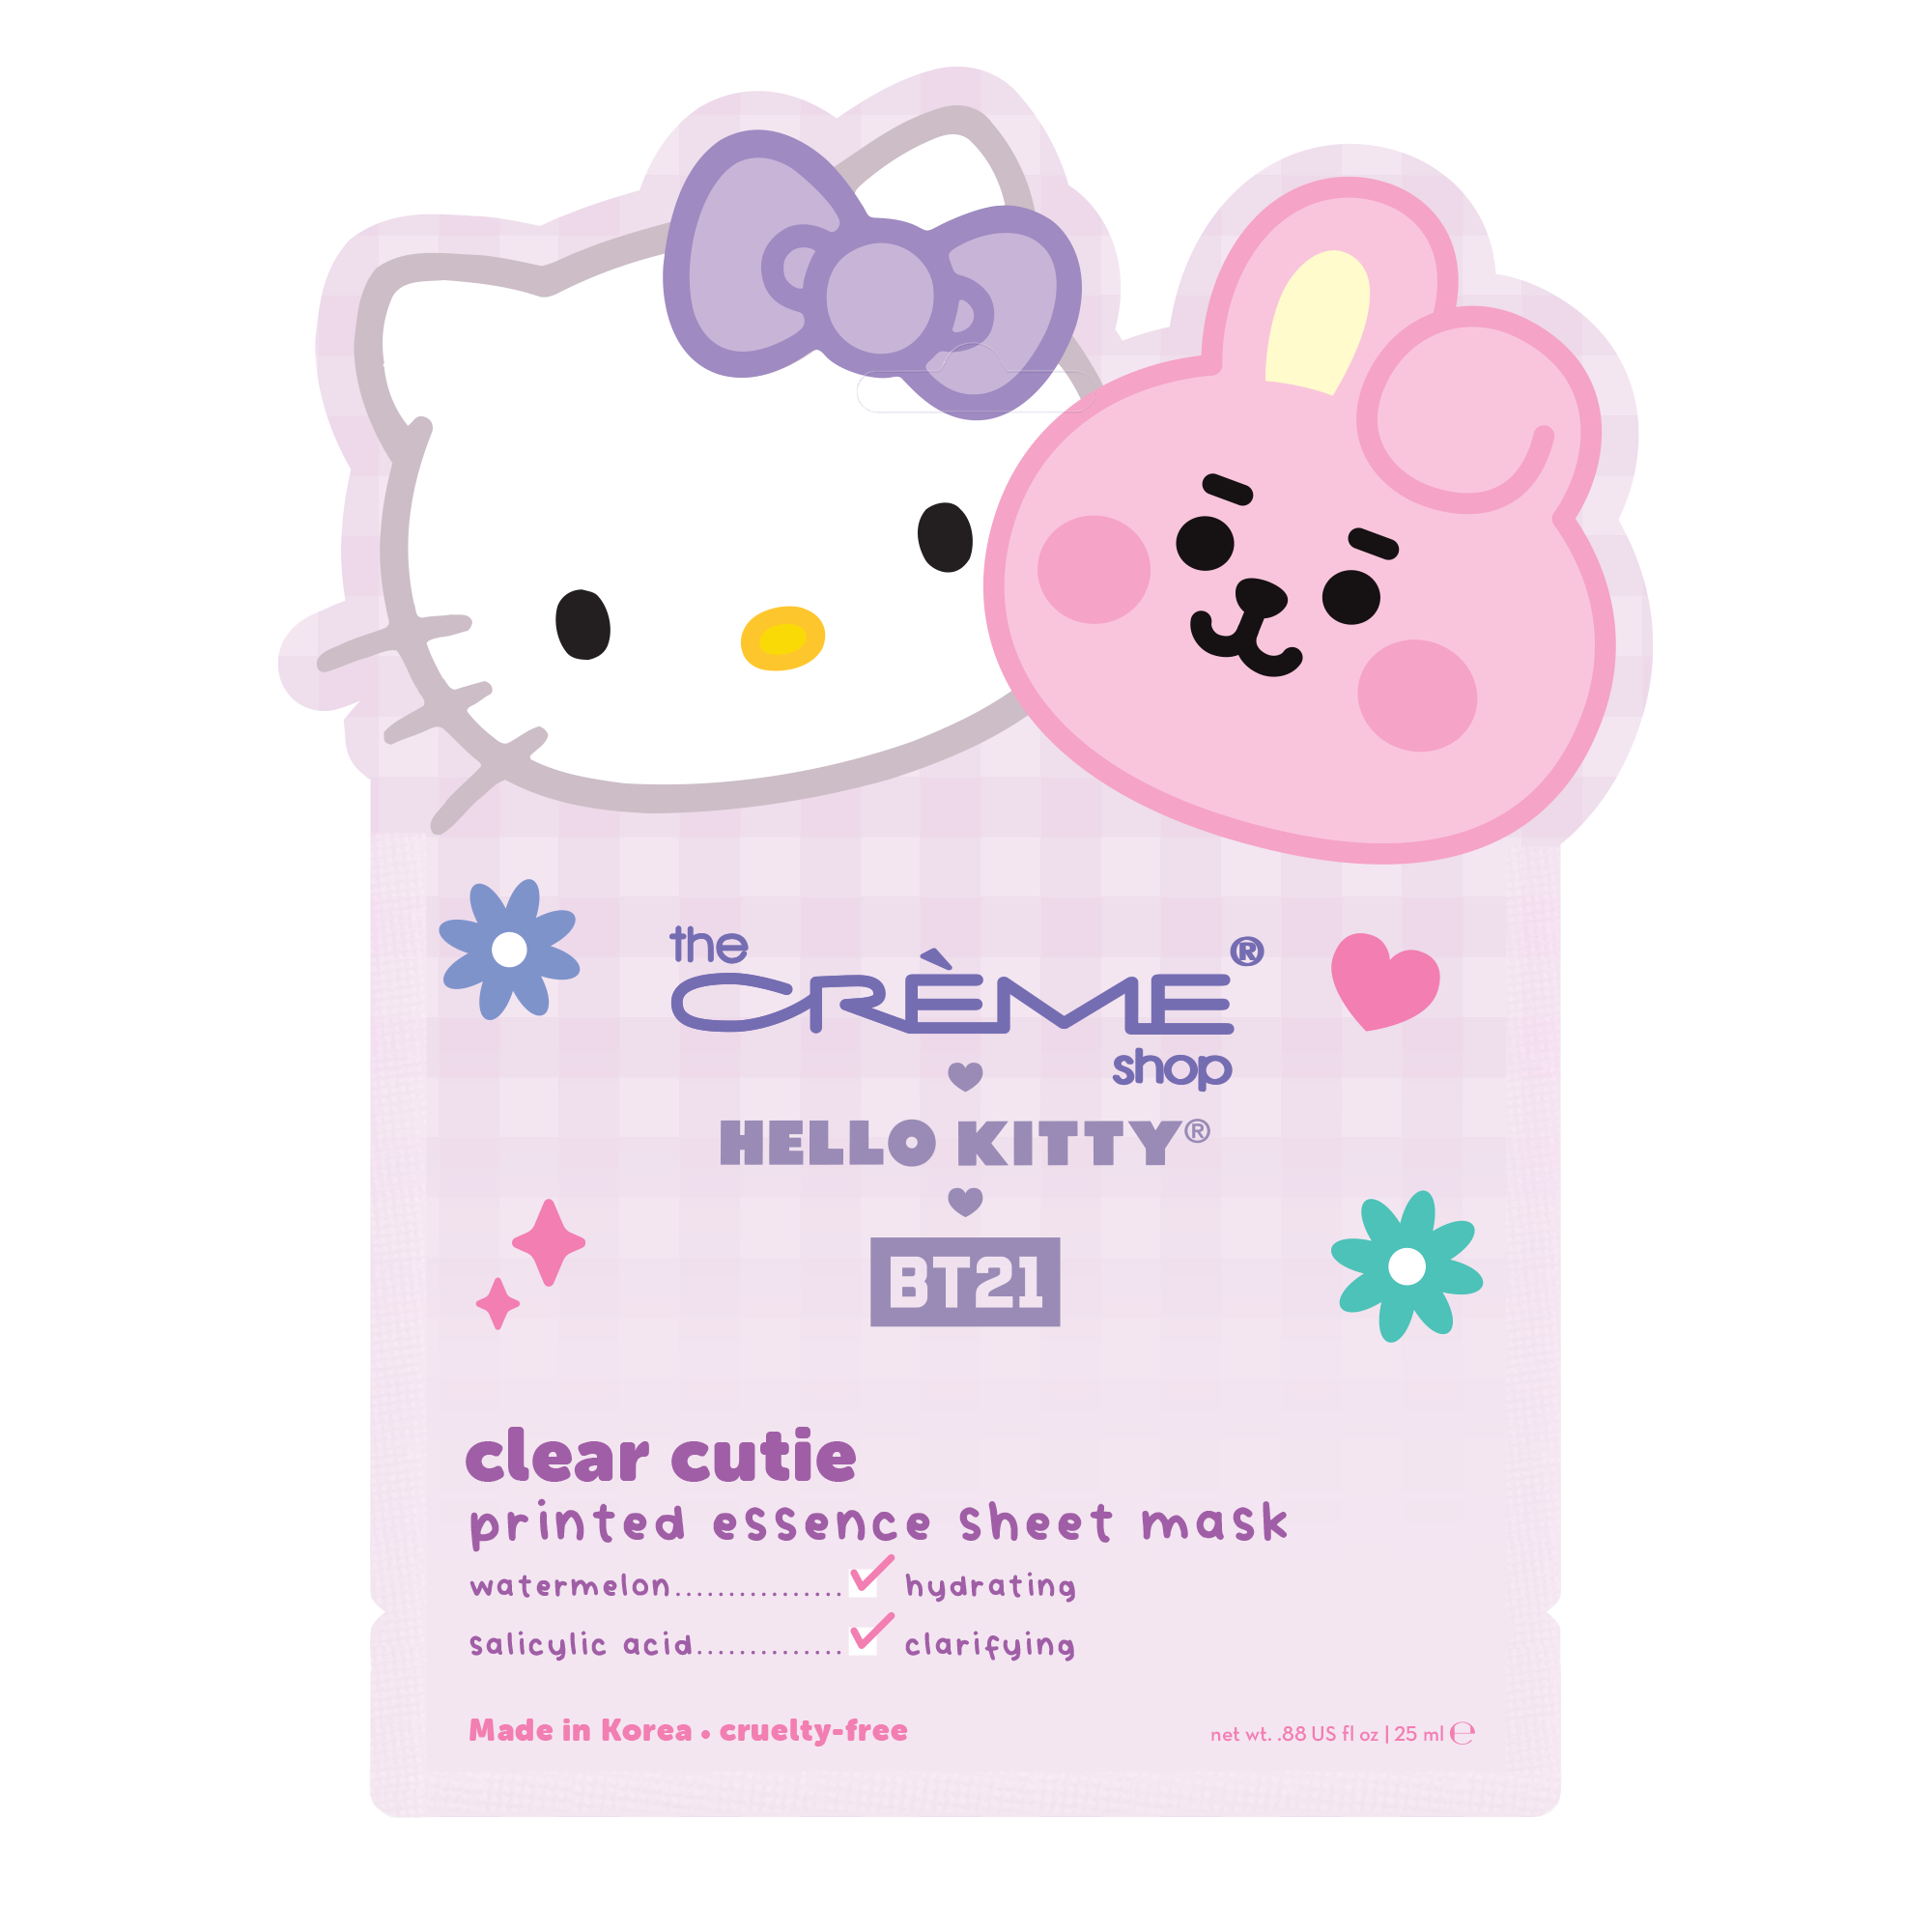 Hello Kitty & BT21 Clear Cutie Printed Essence Sheet Mask Beauty The Crème Shop   